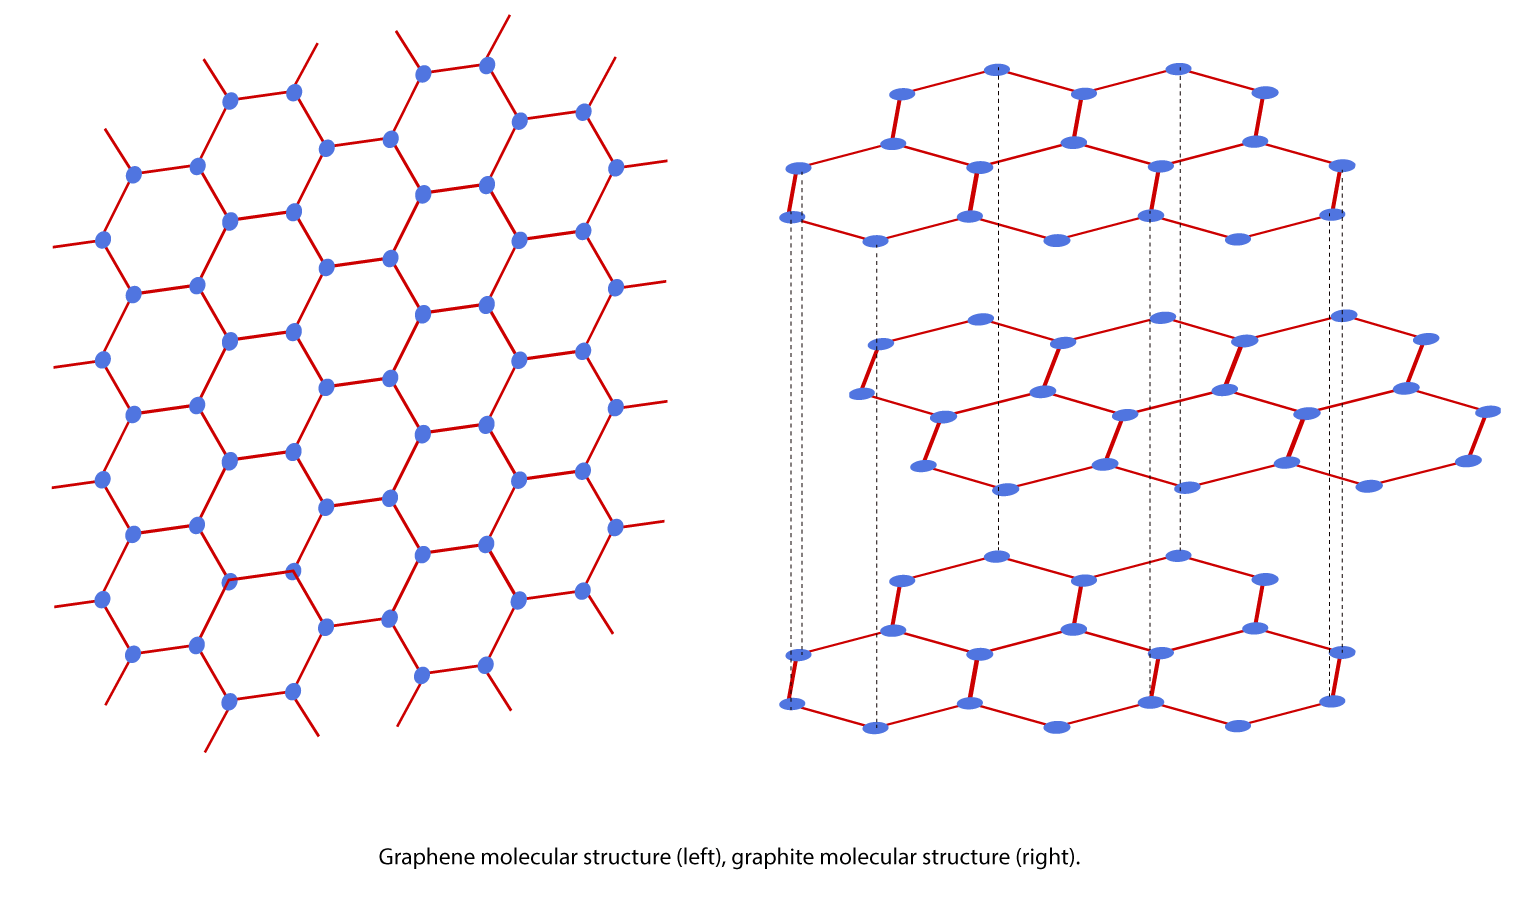 Figure 1. Graphene molecular structure (left), graphite molecular structure (right).